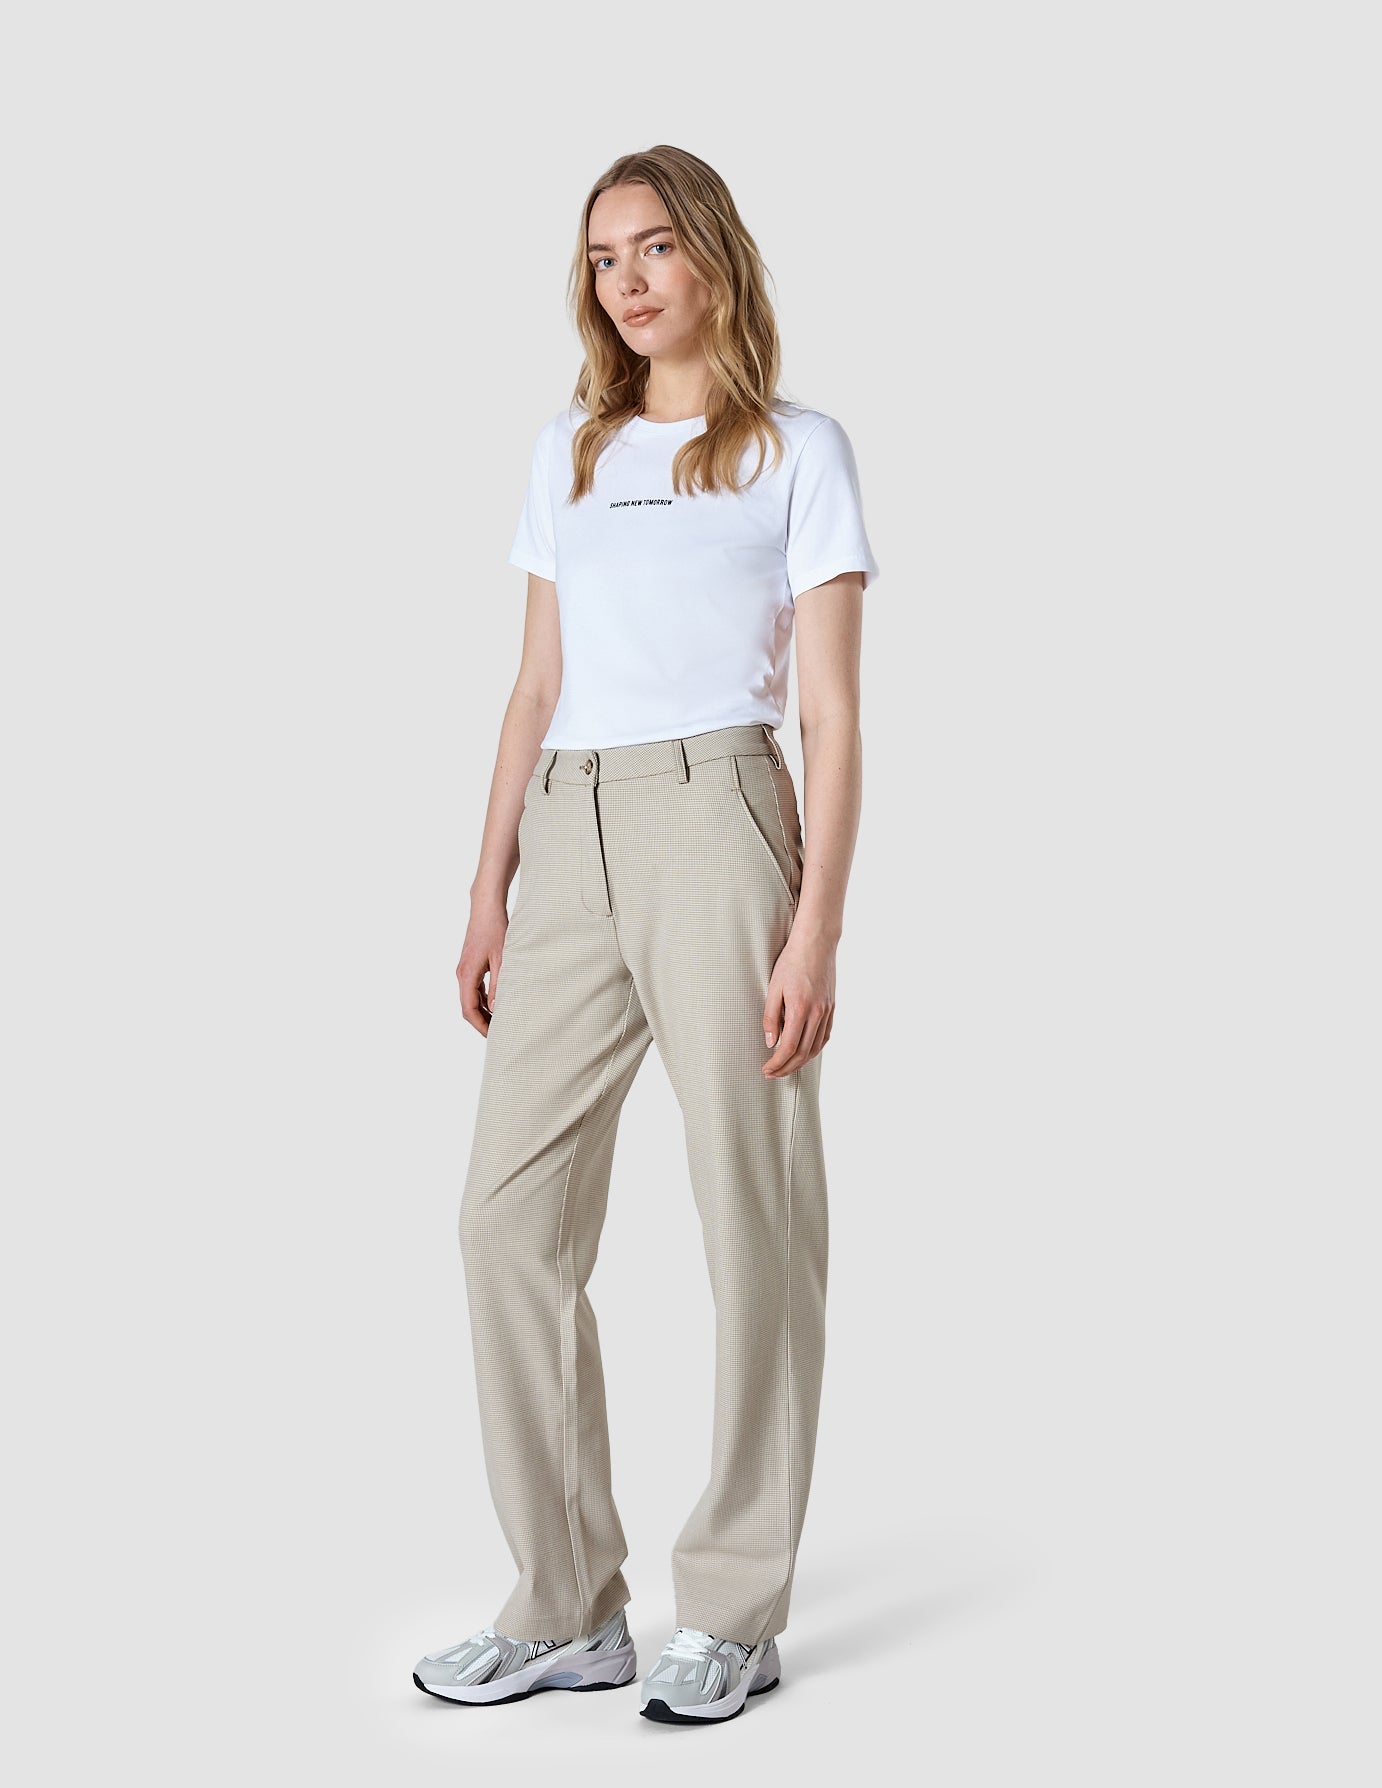 Women's Petite/ Short Pull-On Bariatric Pants - Silverts